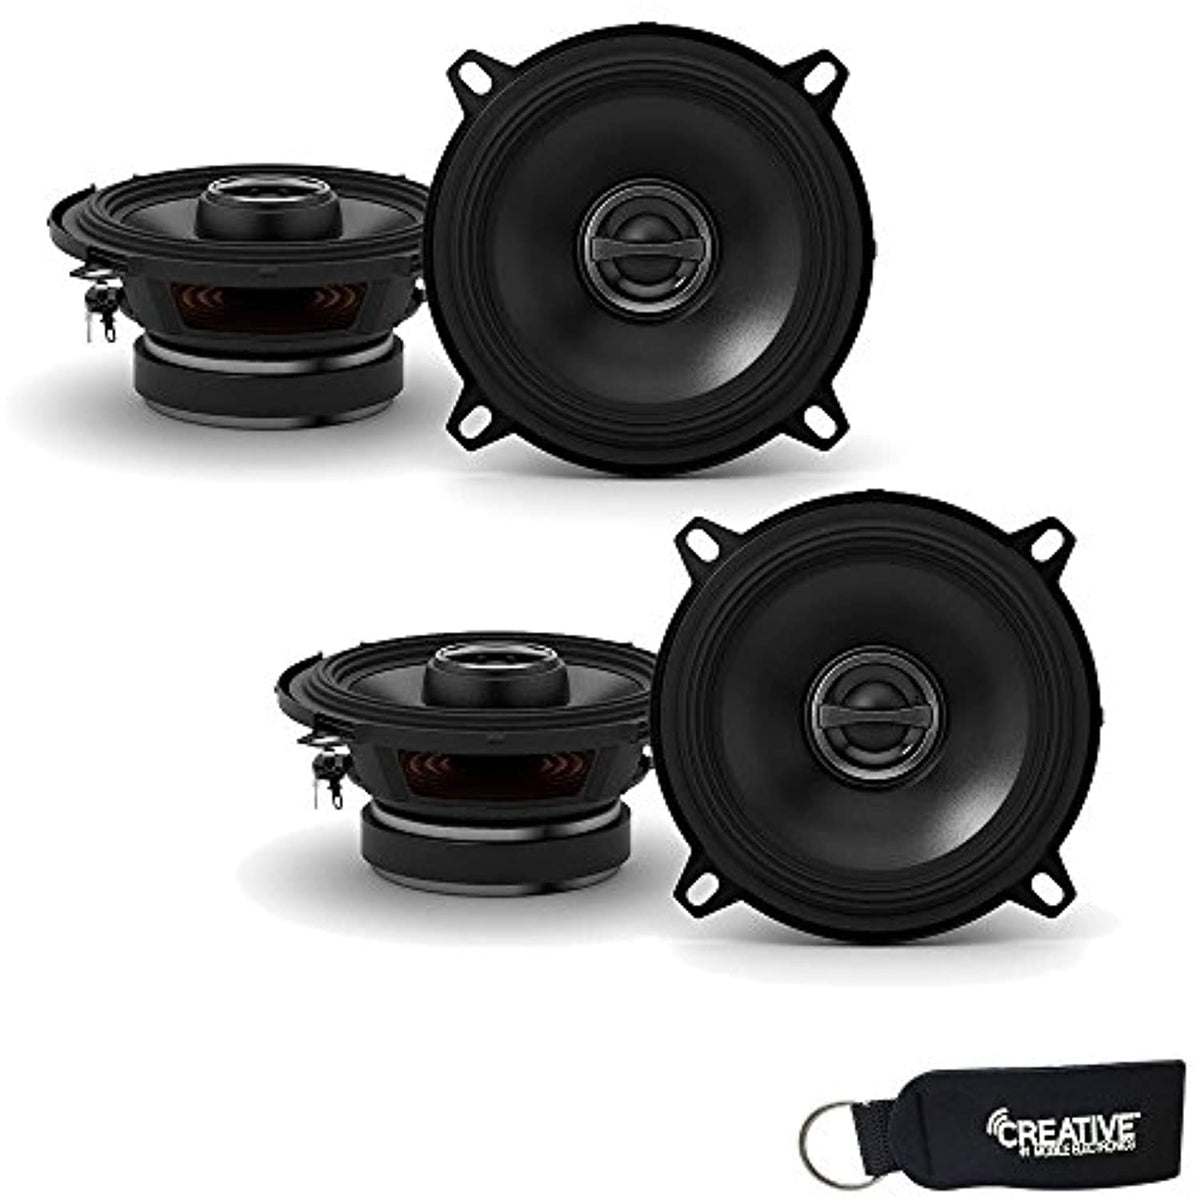 Alpine S-S50 5.25" Speaker Bundle - Two Pairs of 5.25" S-Series S-S50 2-Way Coaxial Speakers